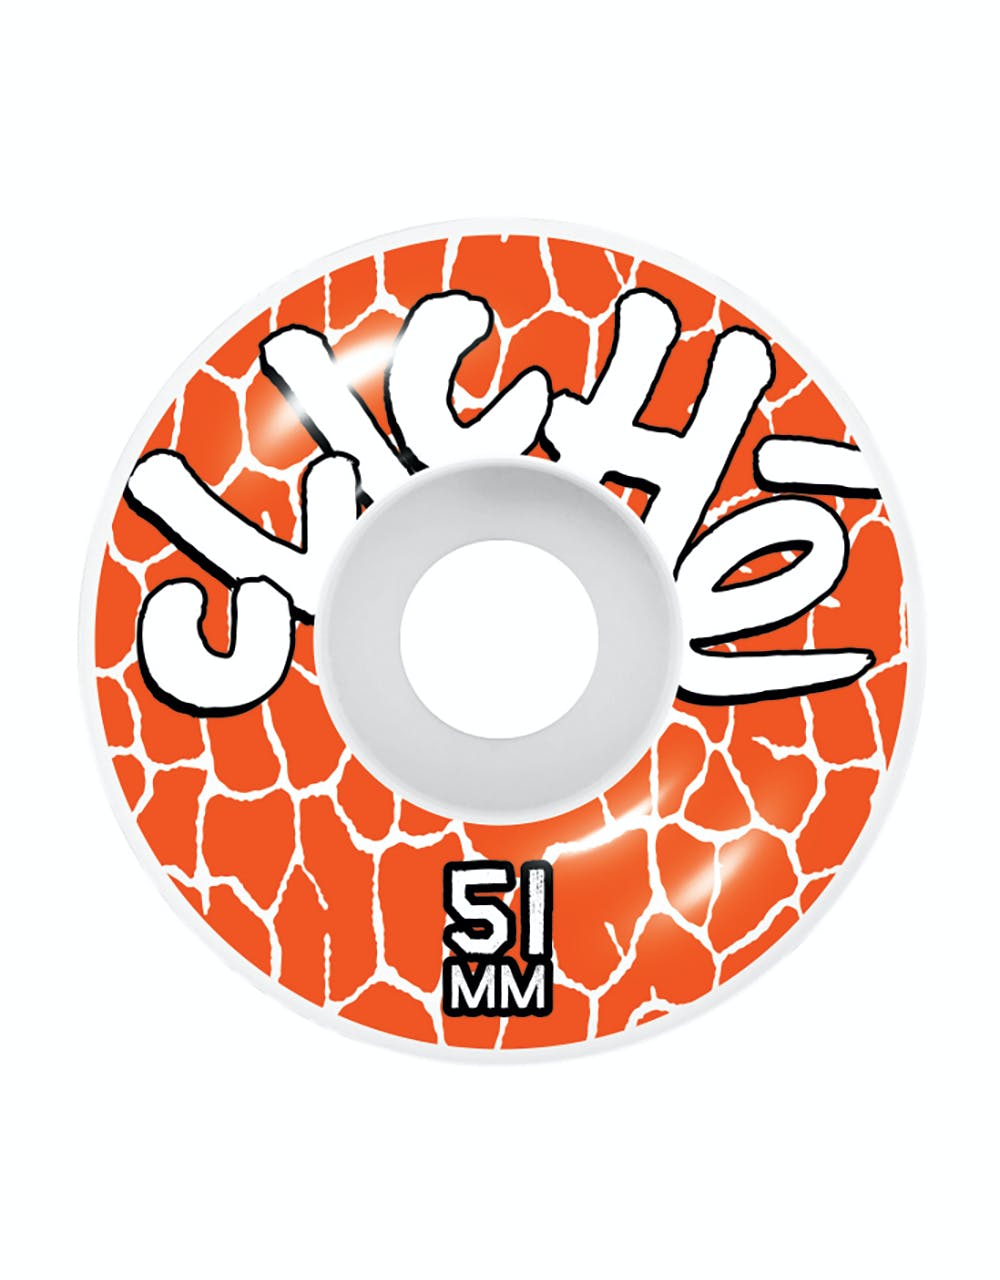 Cliché Patch Mid Complete Skateboard - 7.375"